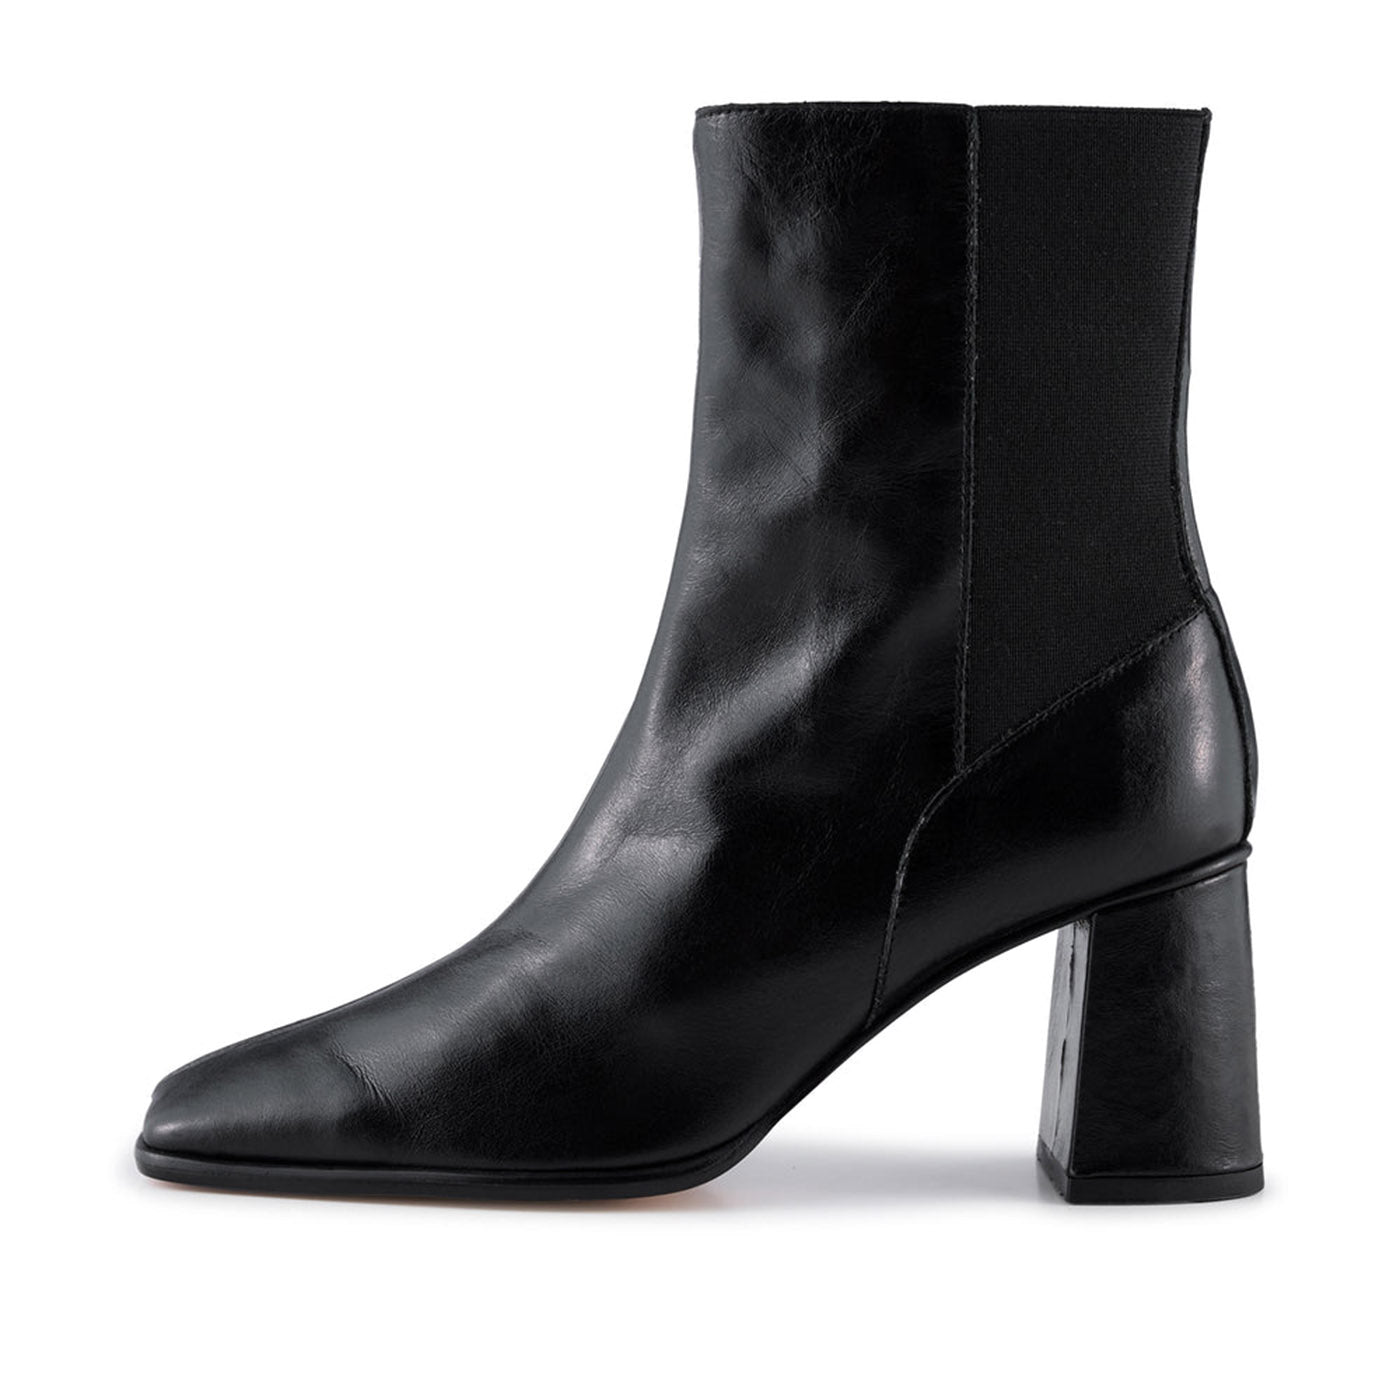 SHOE THE BEAR WOMENS Agata chelsea boot leather Chelsea Boots 110 BLACK